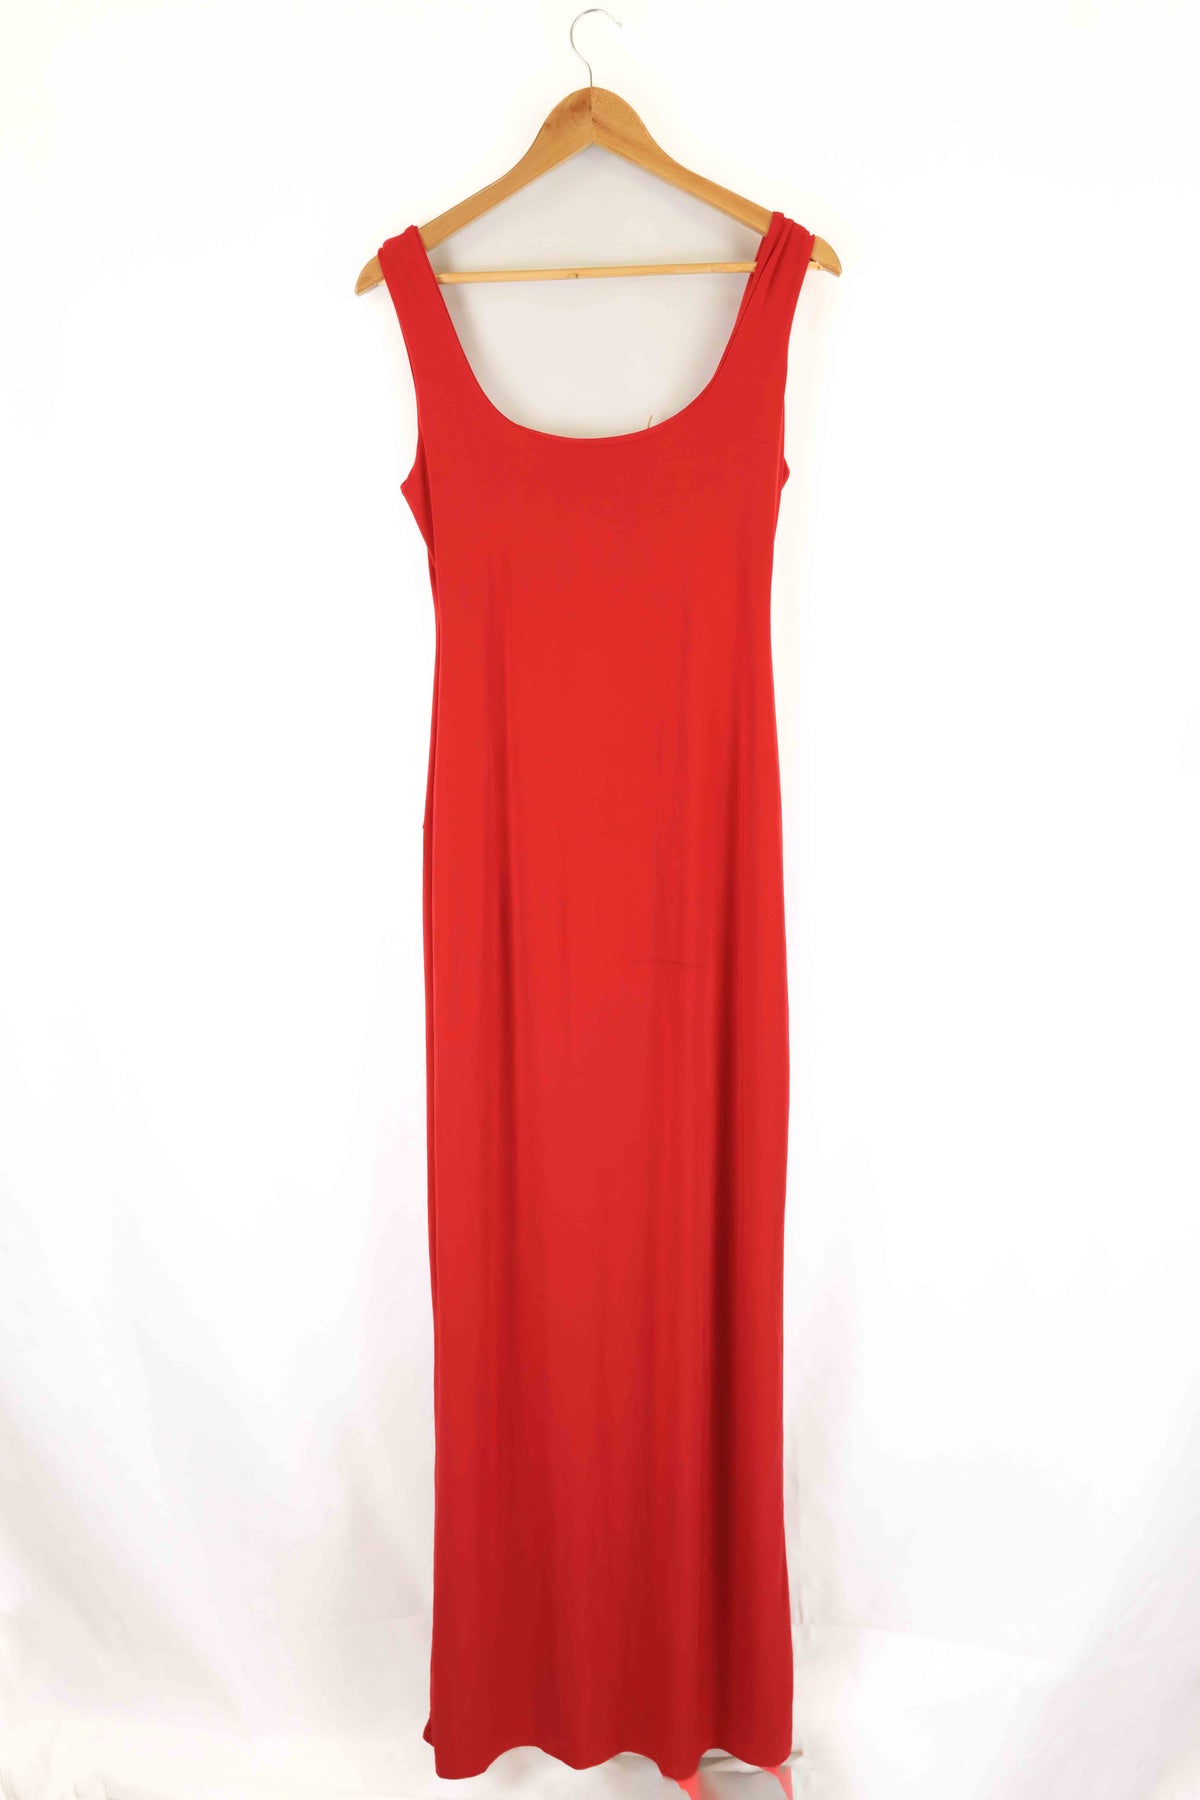 Club London Red Bodycon Maxi Dress 12